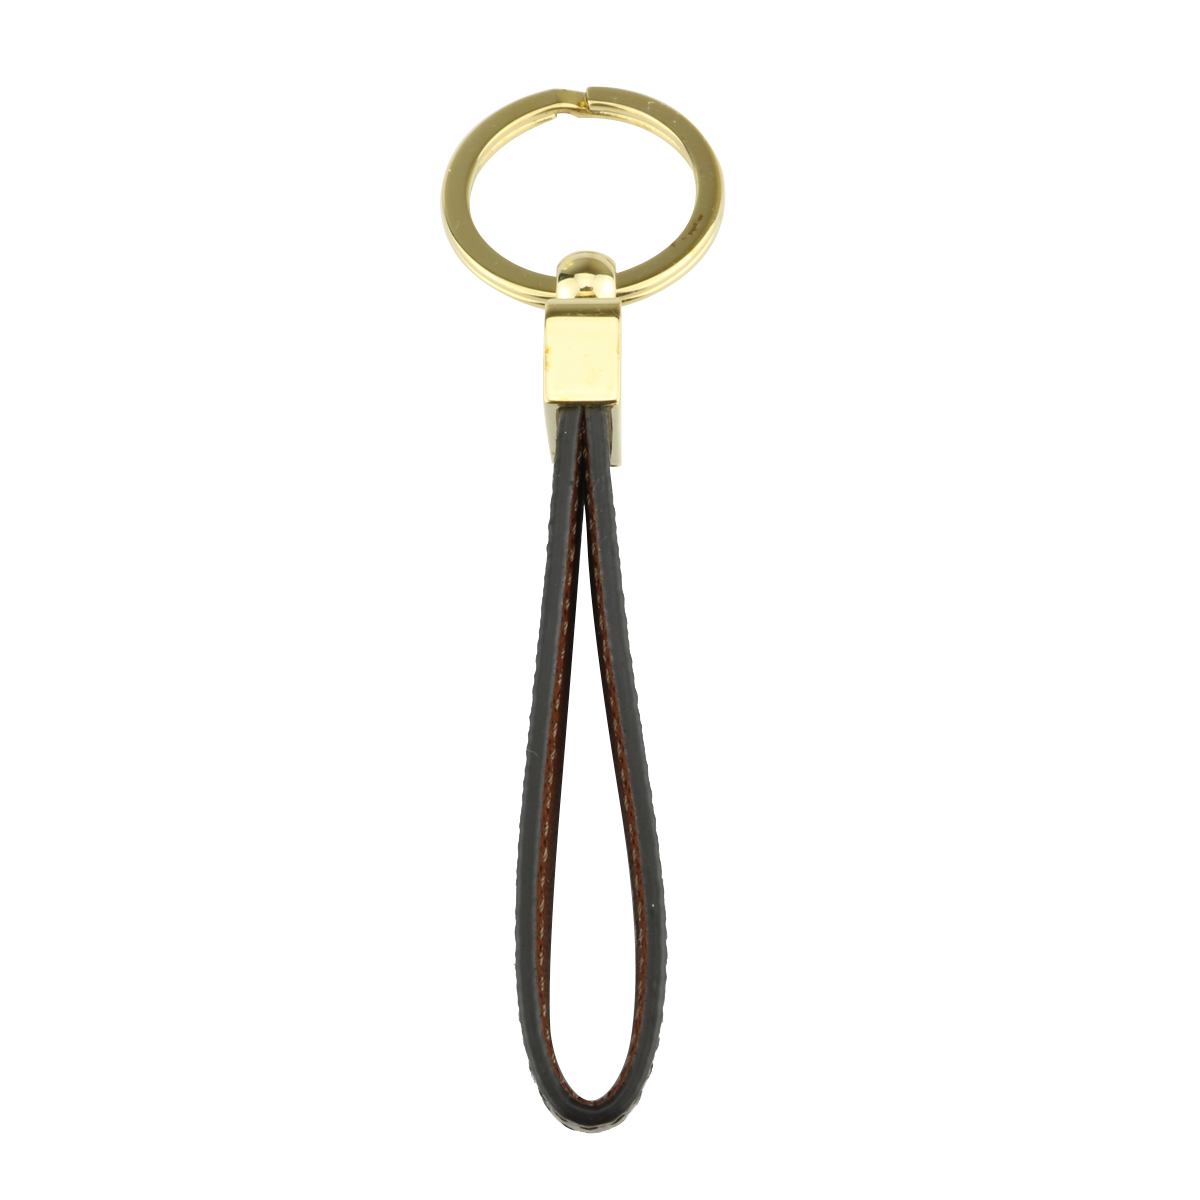 Louis Vuitton Dragonne Key Holder in Monogram - SOLD